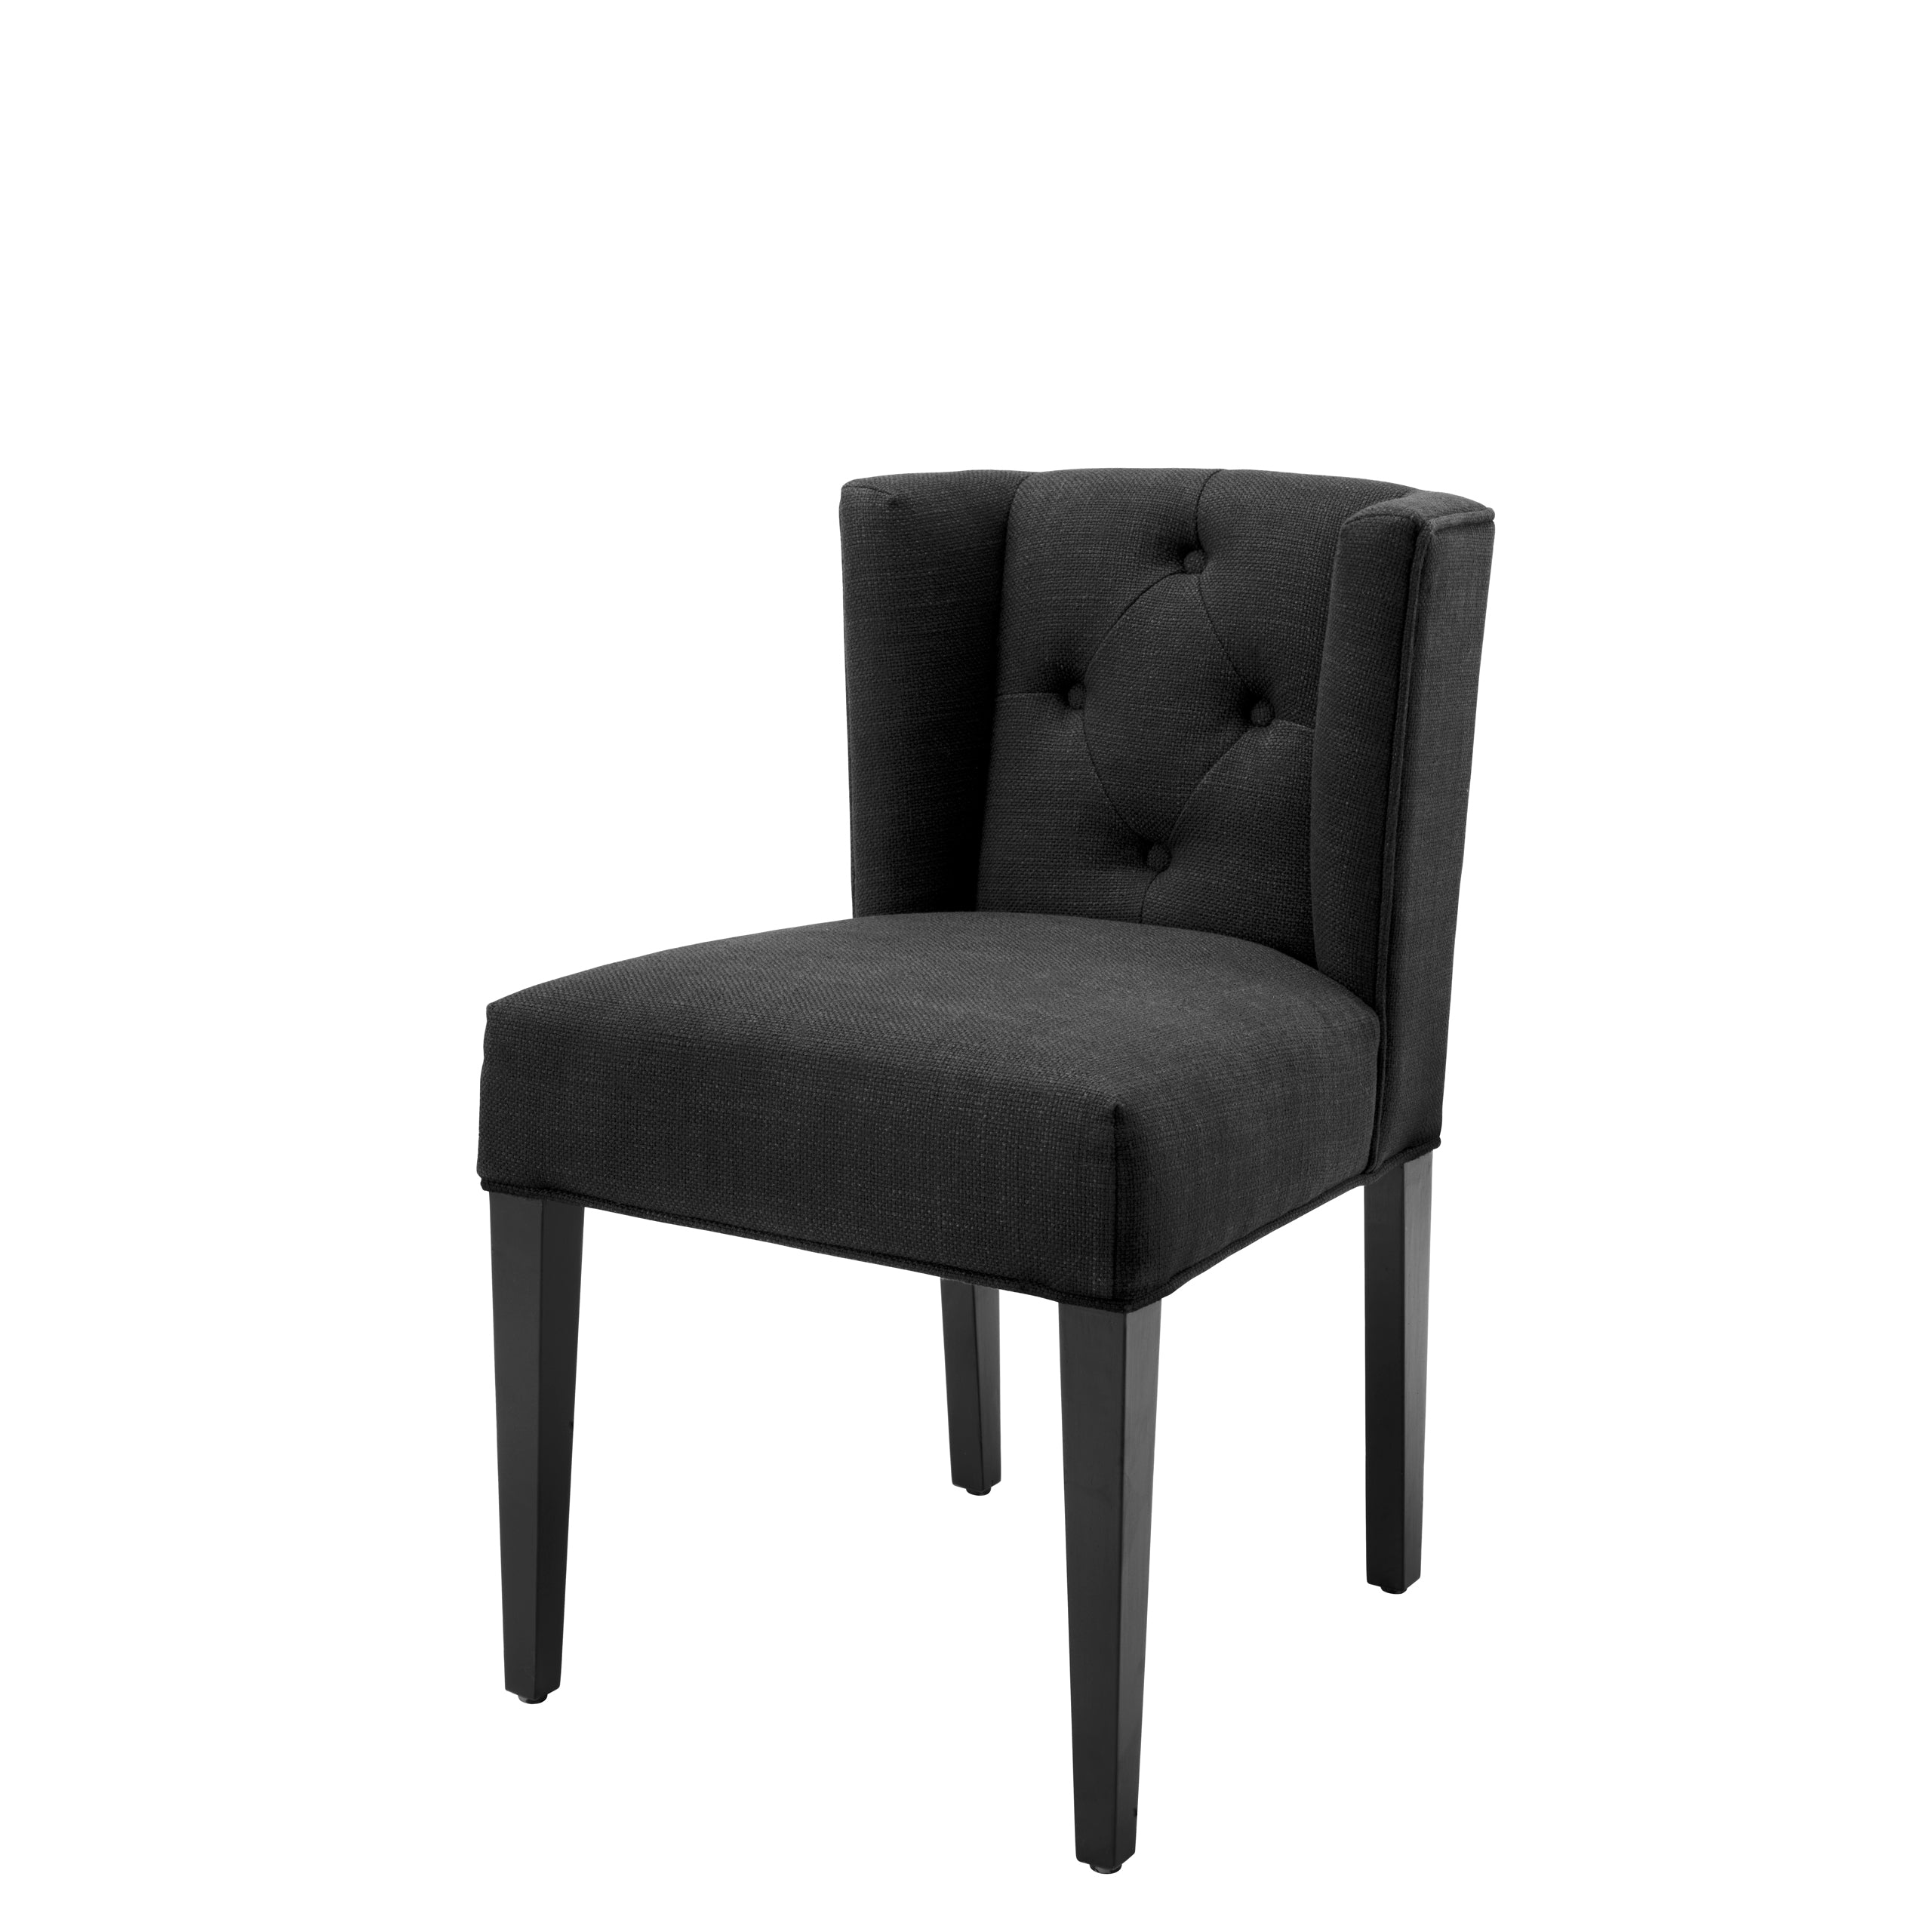 Eichholtz Boca Raton Dining Chair Panama Black